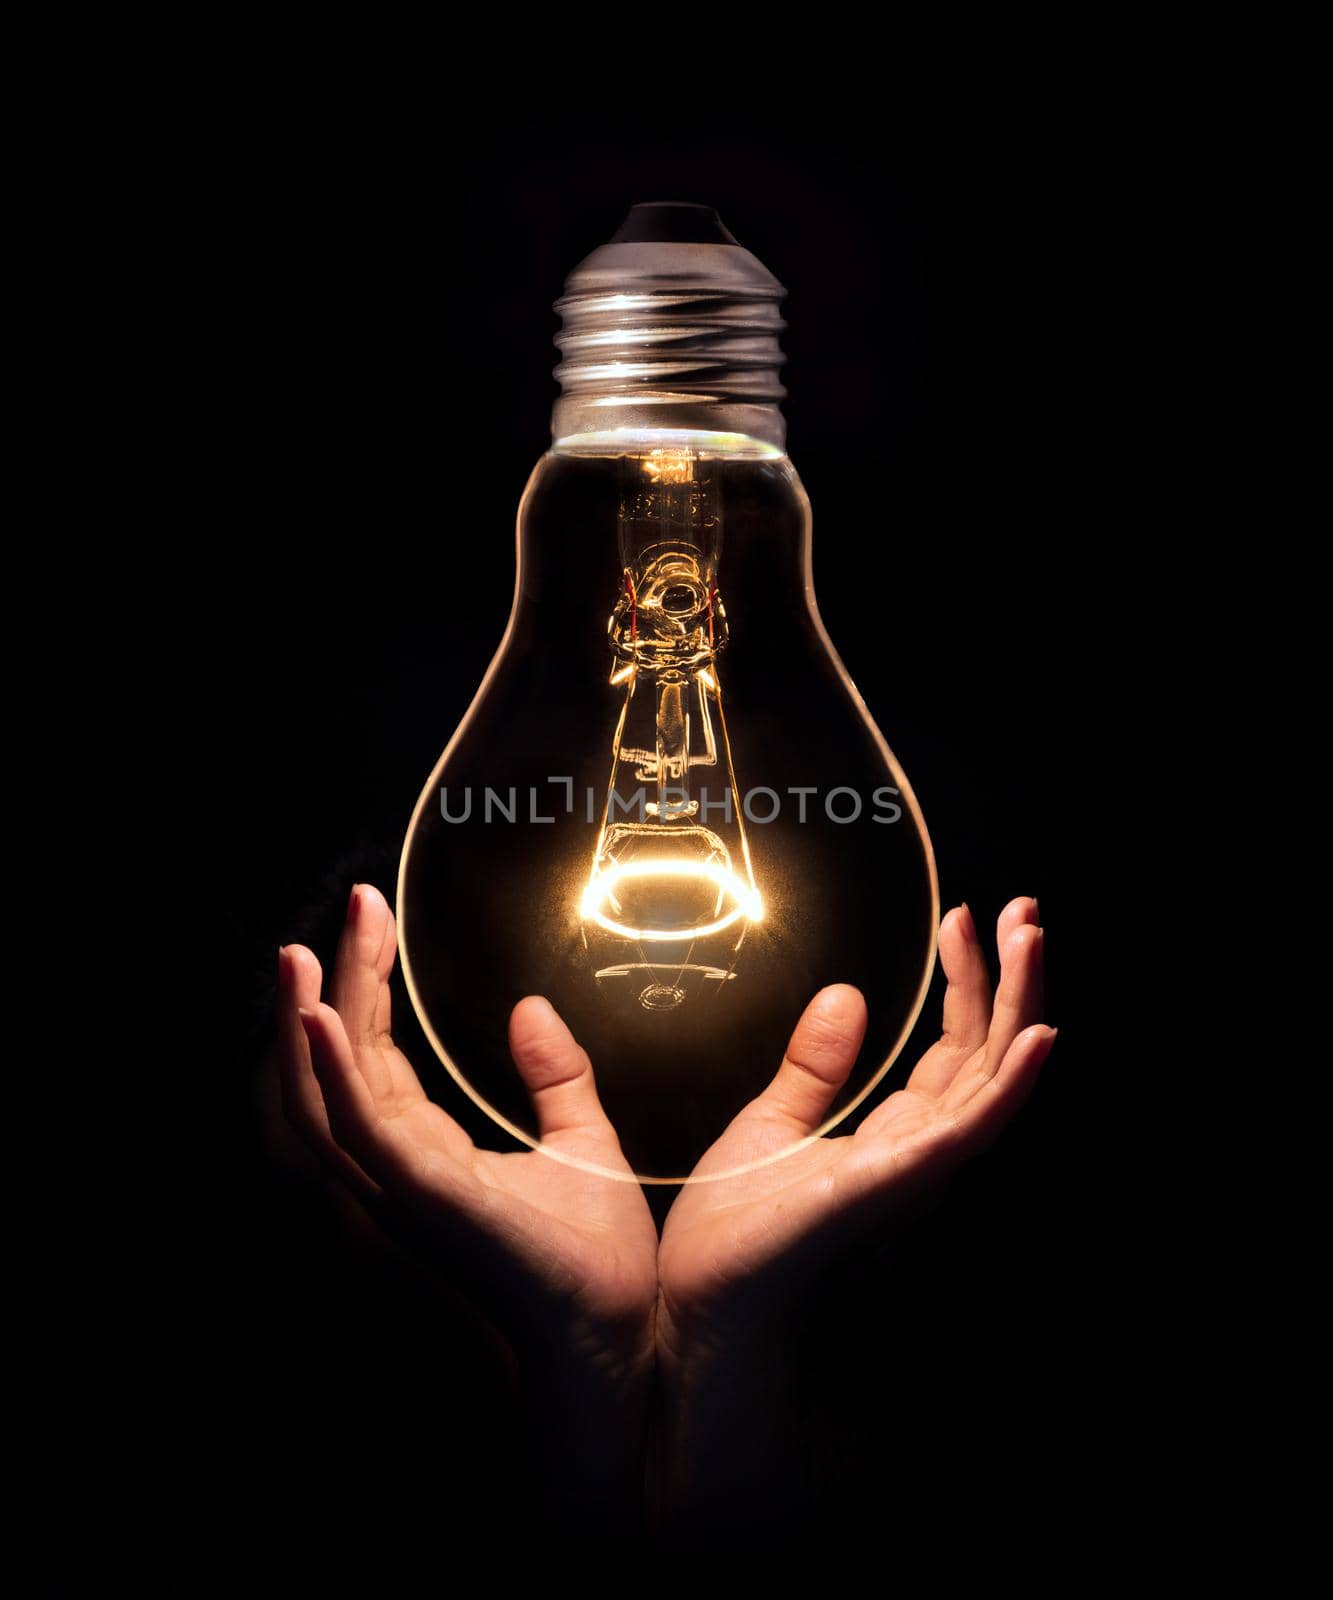 Lightbulb on hand isolate on black background.Energy or idea concept